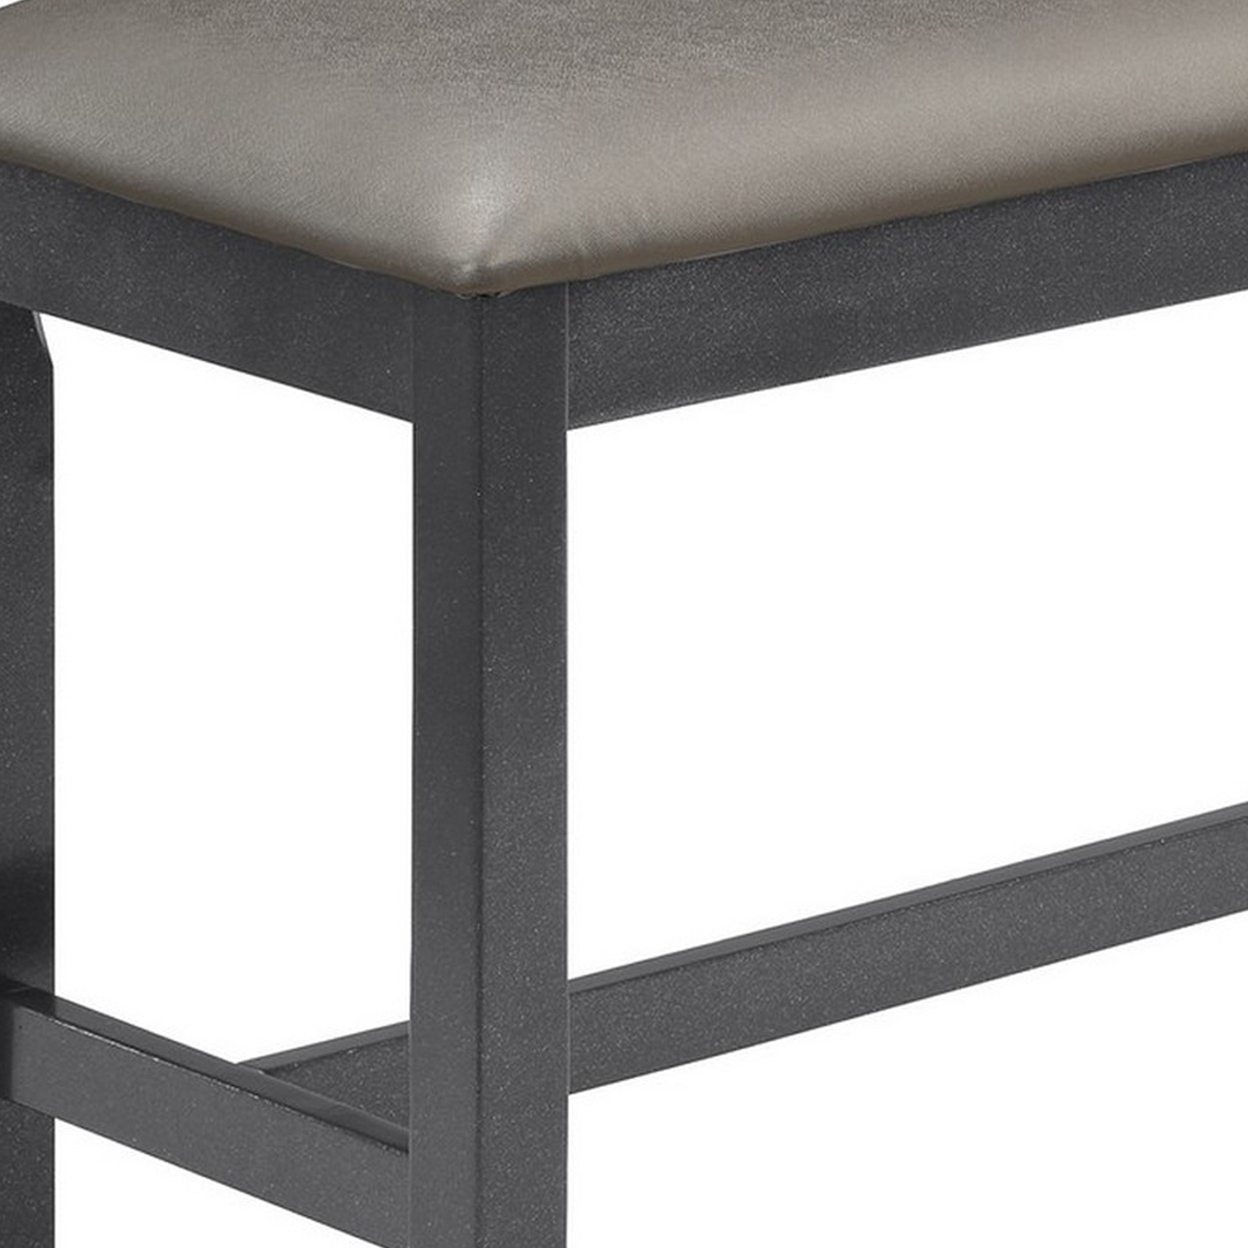 48 Inch Dining Bench, Padded Seat Cushion, Metallic Gray Upholstery, Black- Saltoro Sherpi